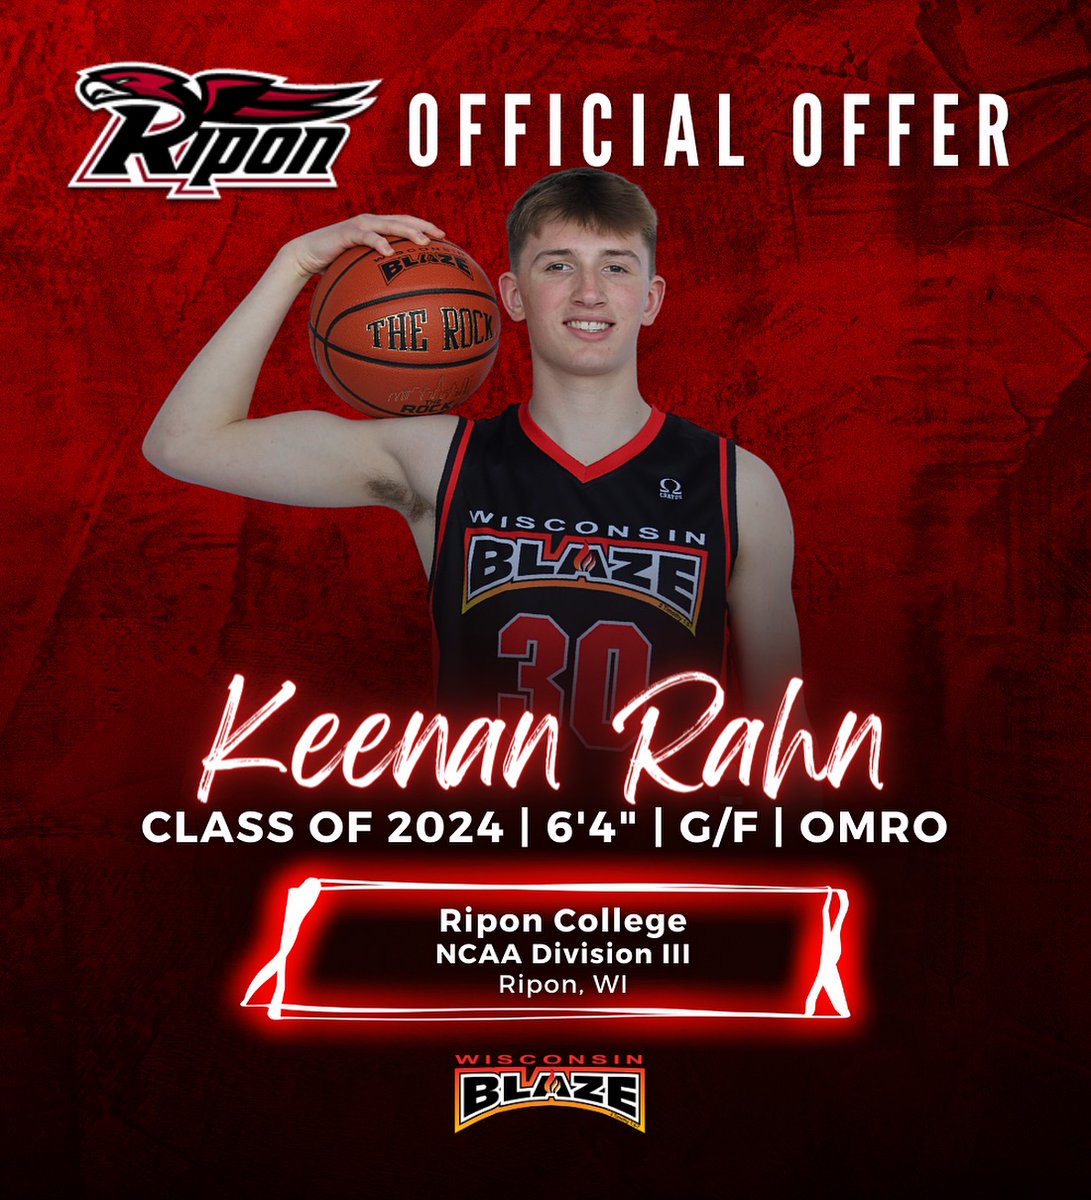 Congratulations Keenan @KeenanRahn3 on receiving an official offer to Ripon College! #wisconsinblaze #beyourbest #betheflame🔥